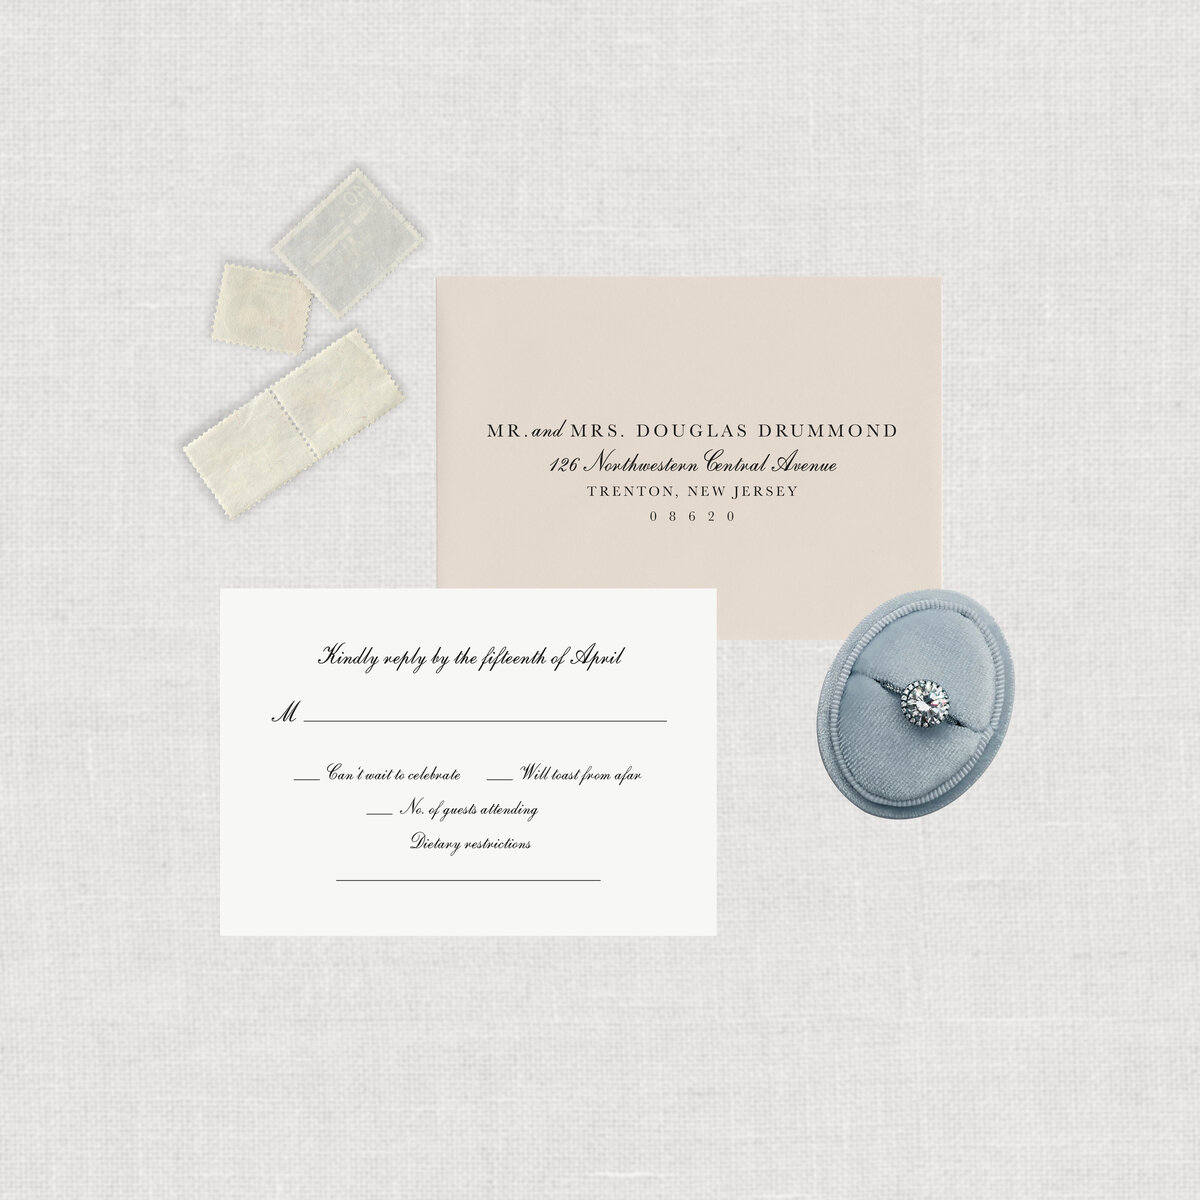 Vintage 1940 wedding invitation suite with rsvp card with rsvp card envelope.